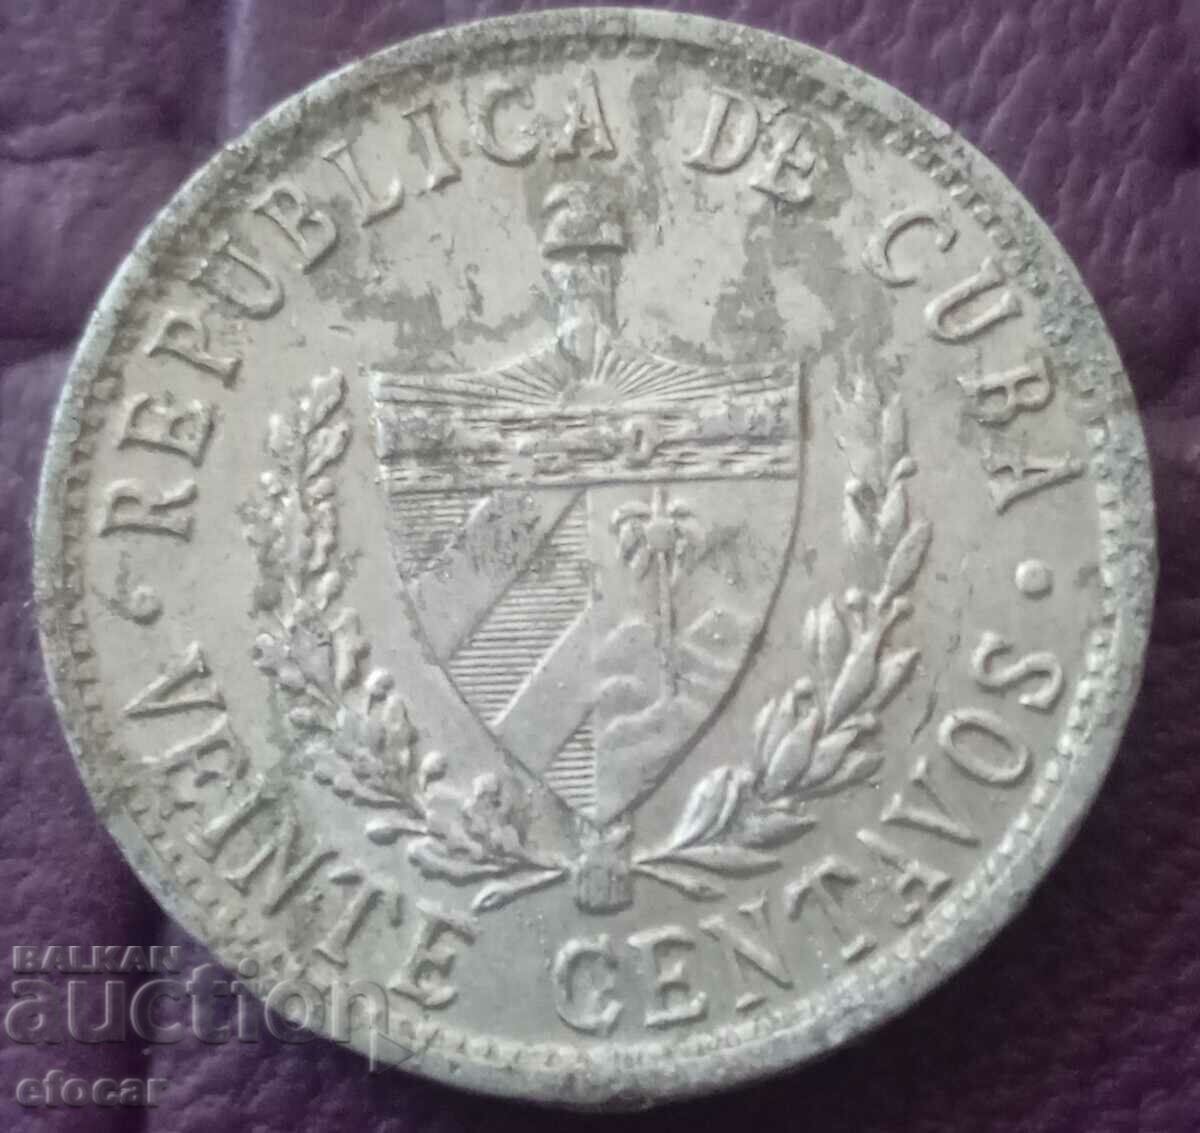 20 centavos Cuba 1972